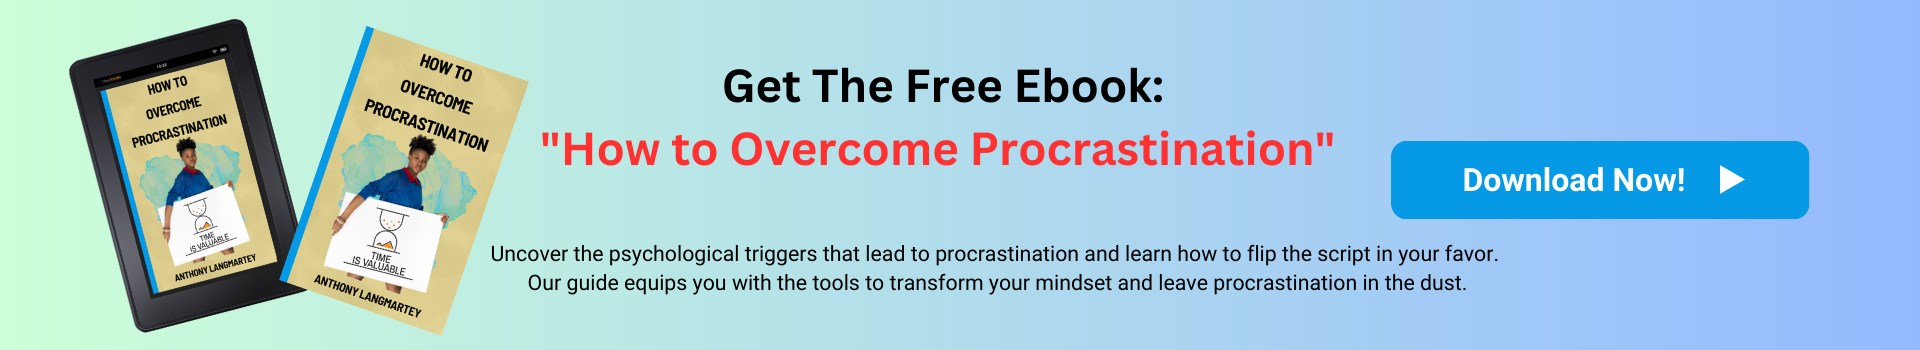 How to Overcome Procrastination Ebook